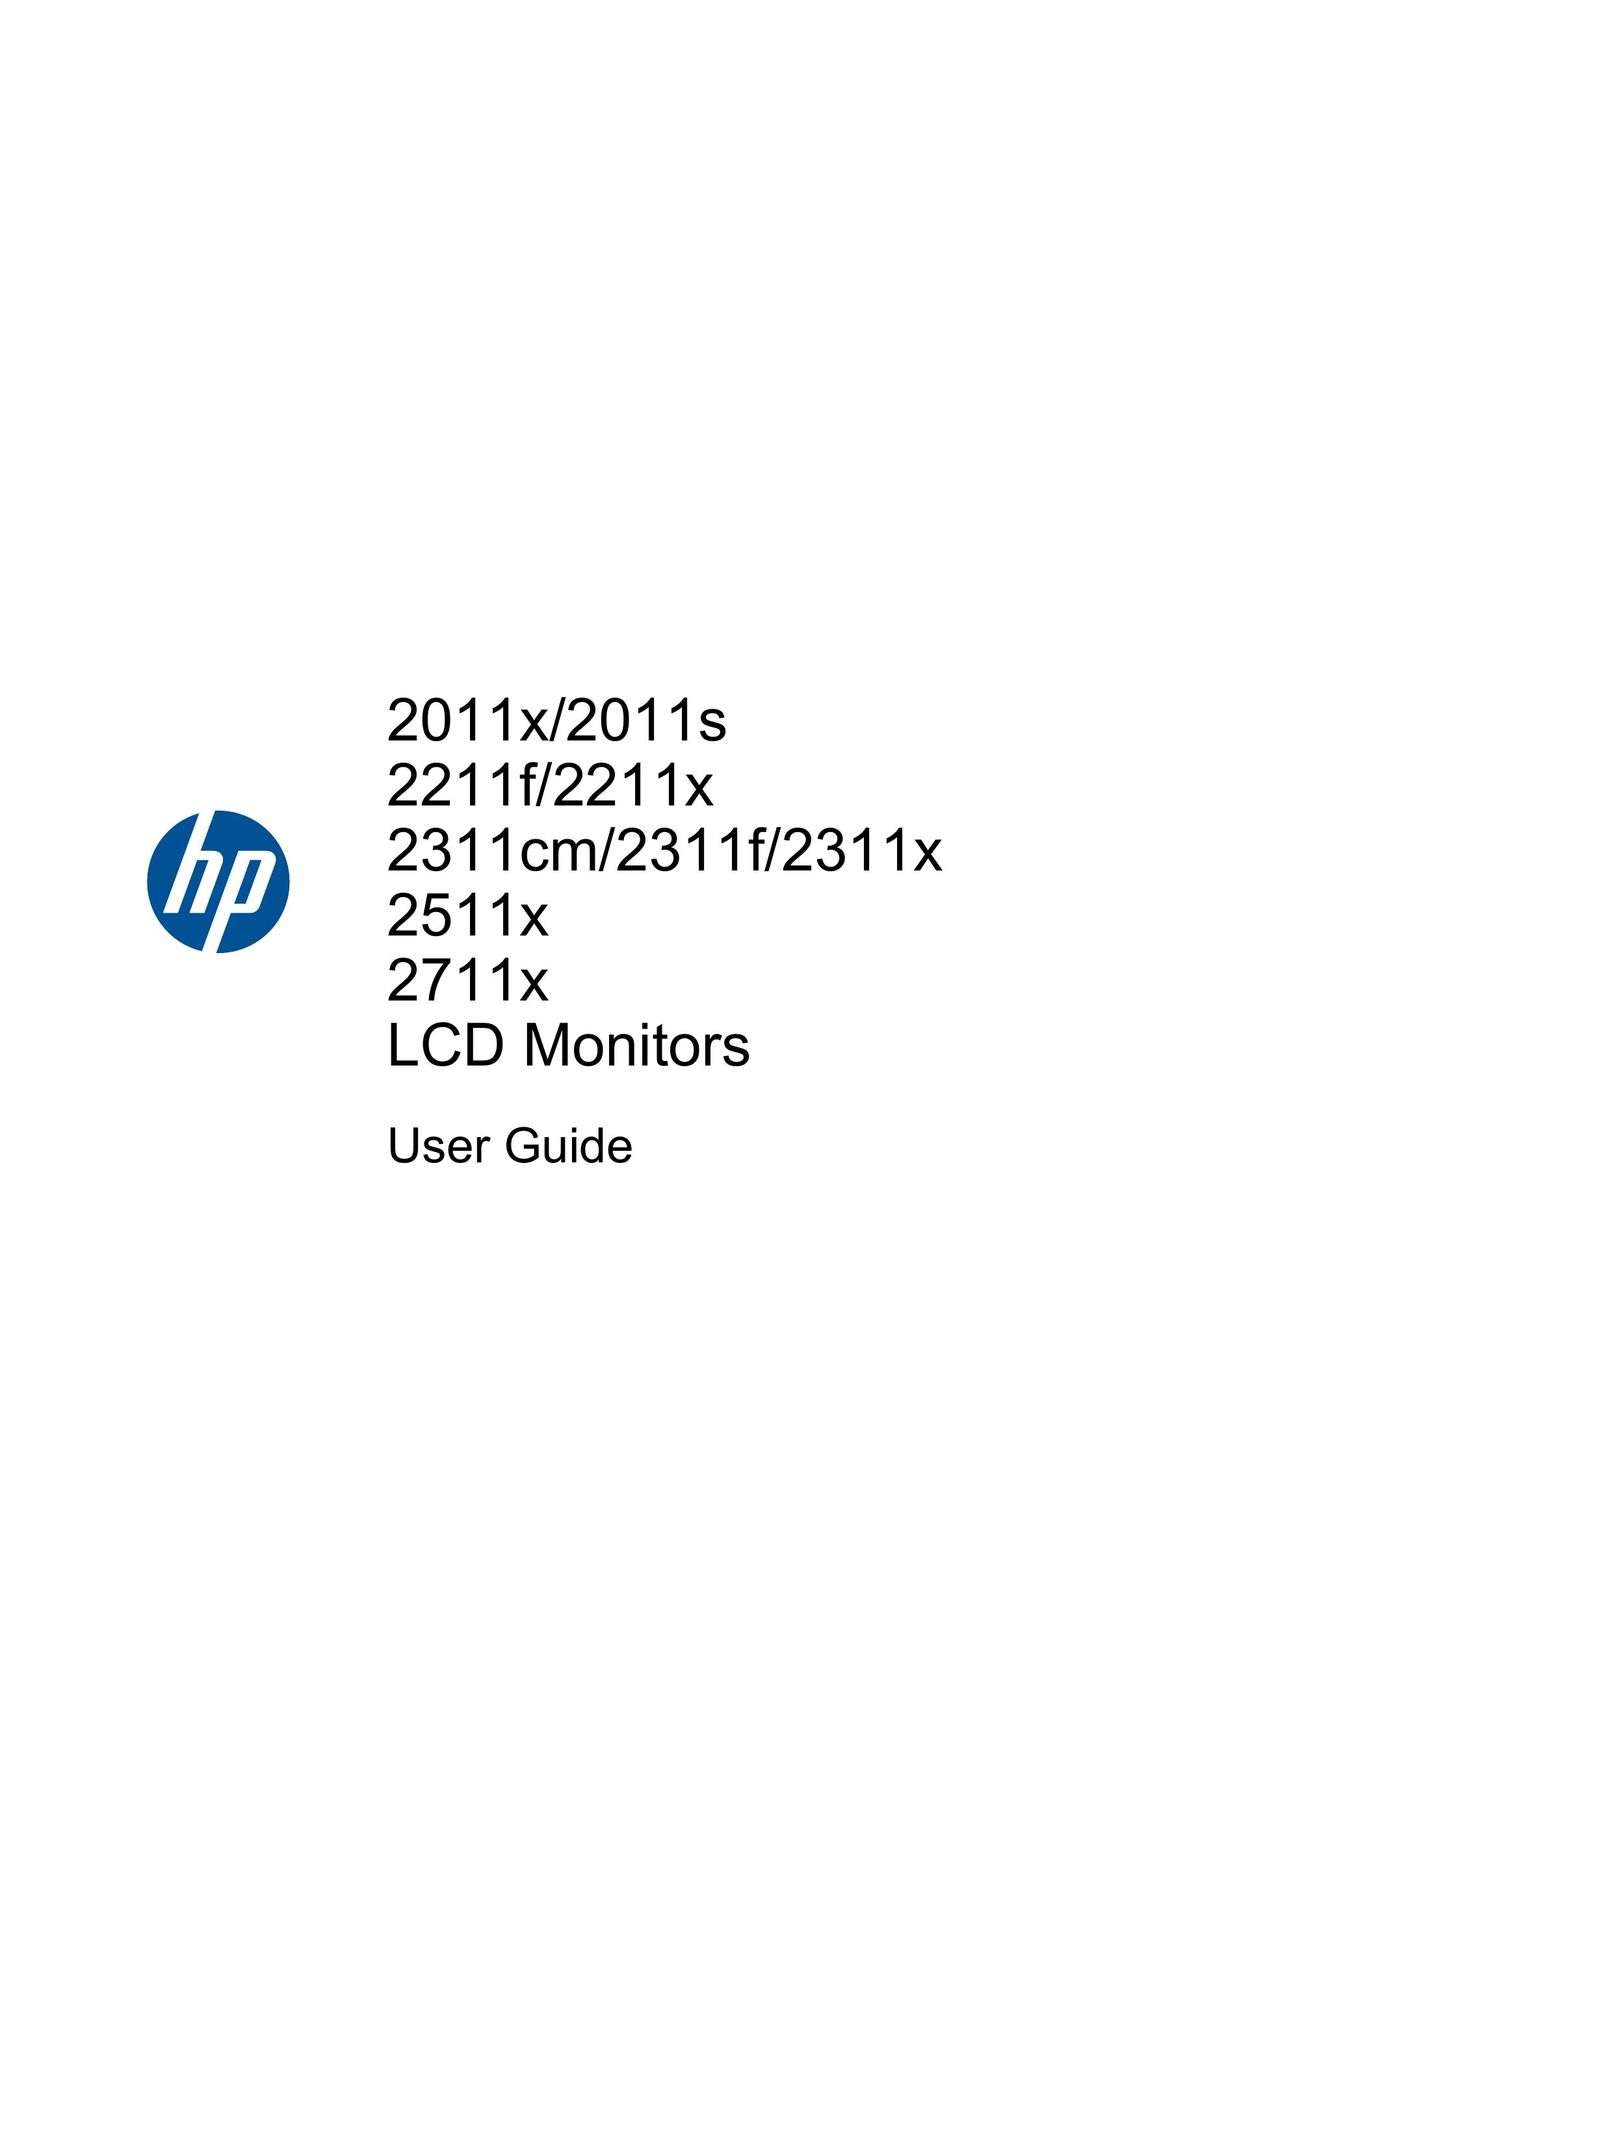 HP (Hewlett-Packard) 2711x Car Video System User Manual (Page 1)